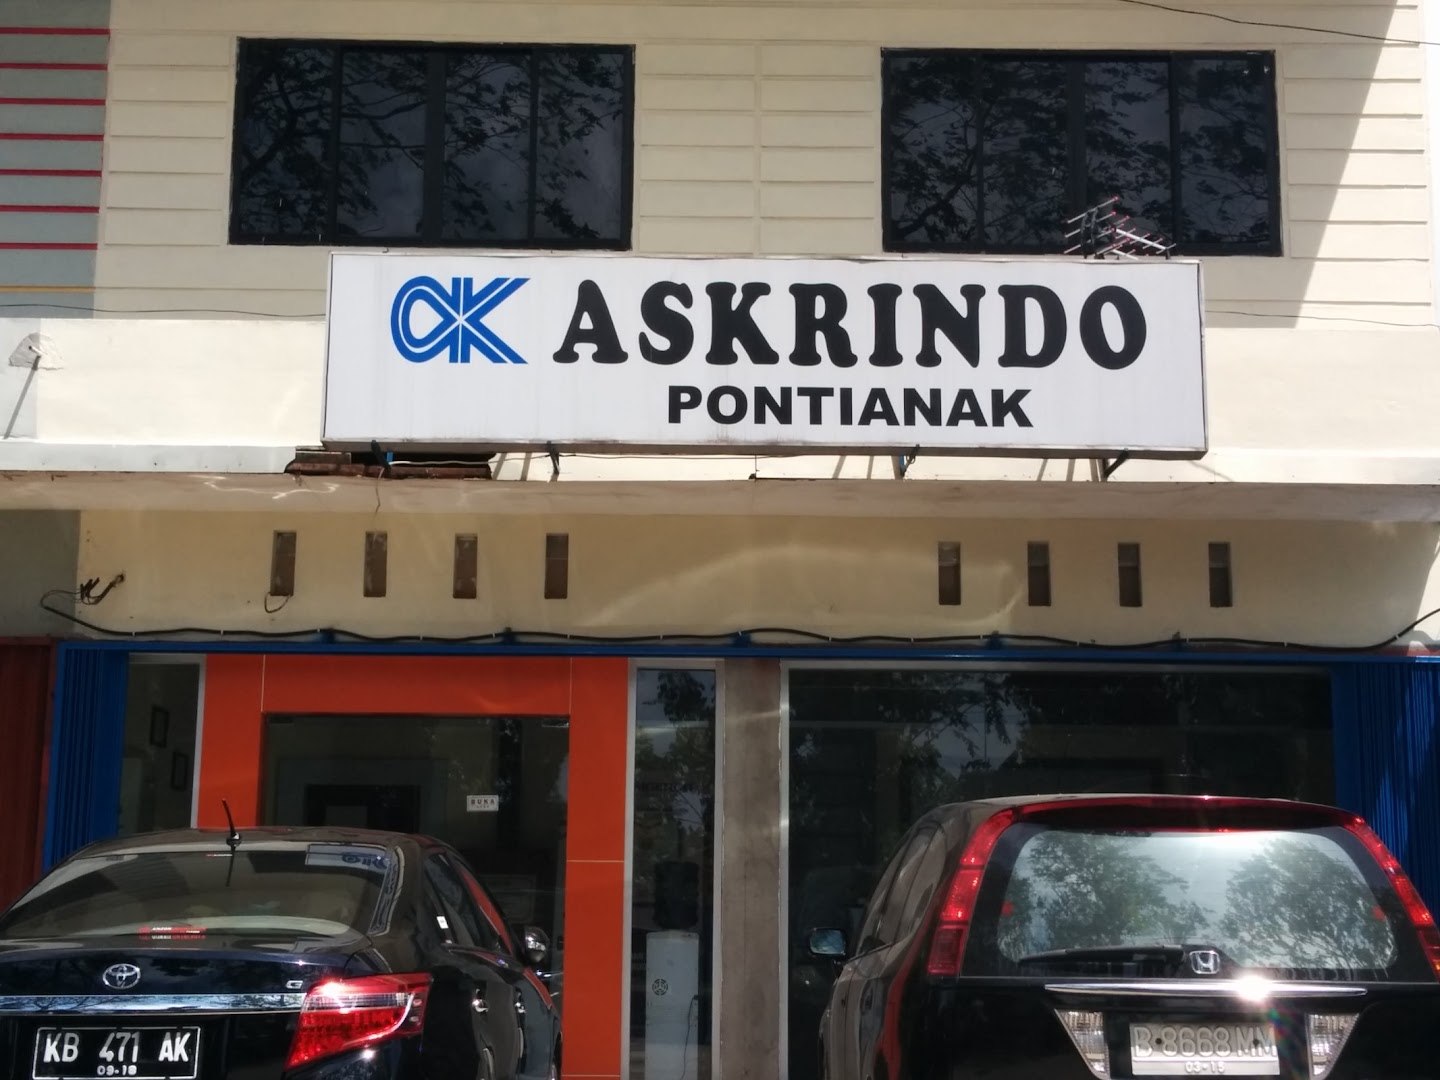 Asuransi Kredit Indonesia. Pt (askrindo) - Pontianak Photo